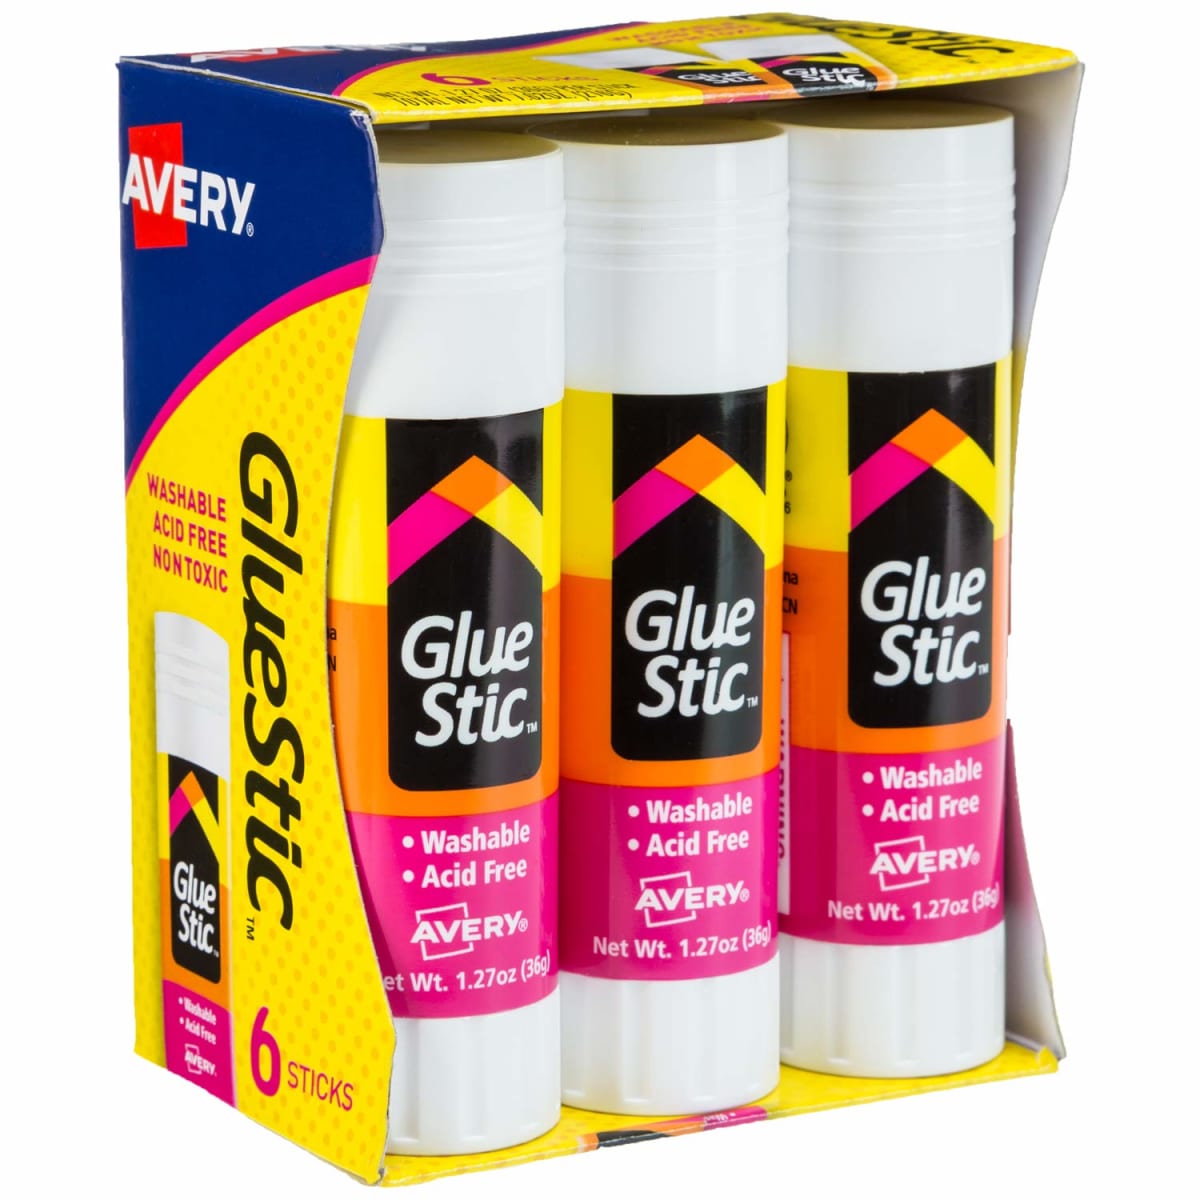 AVERY Glue Stick White